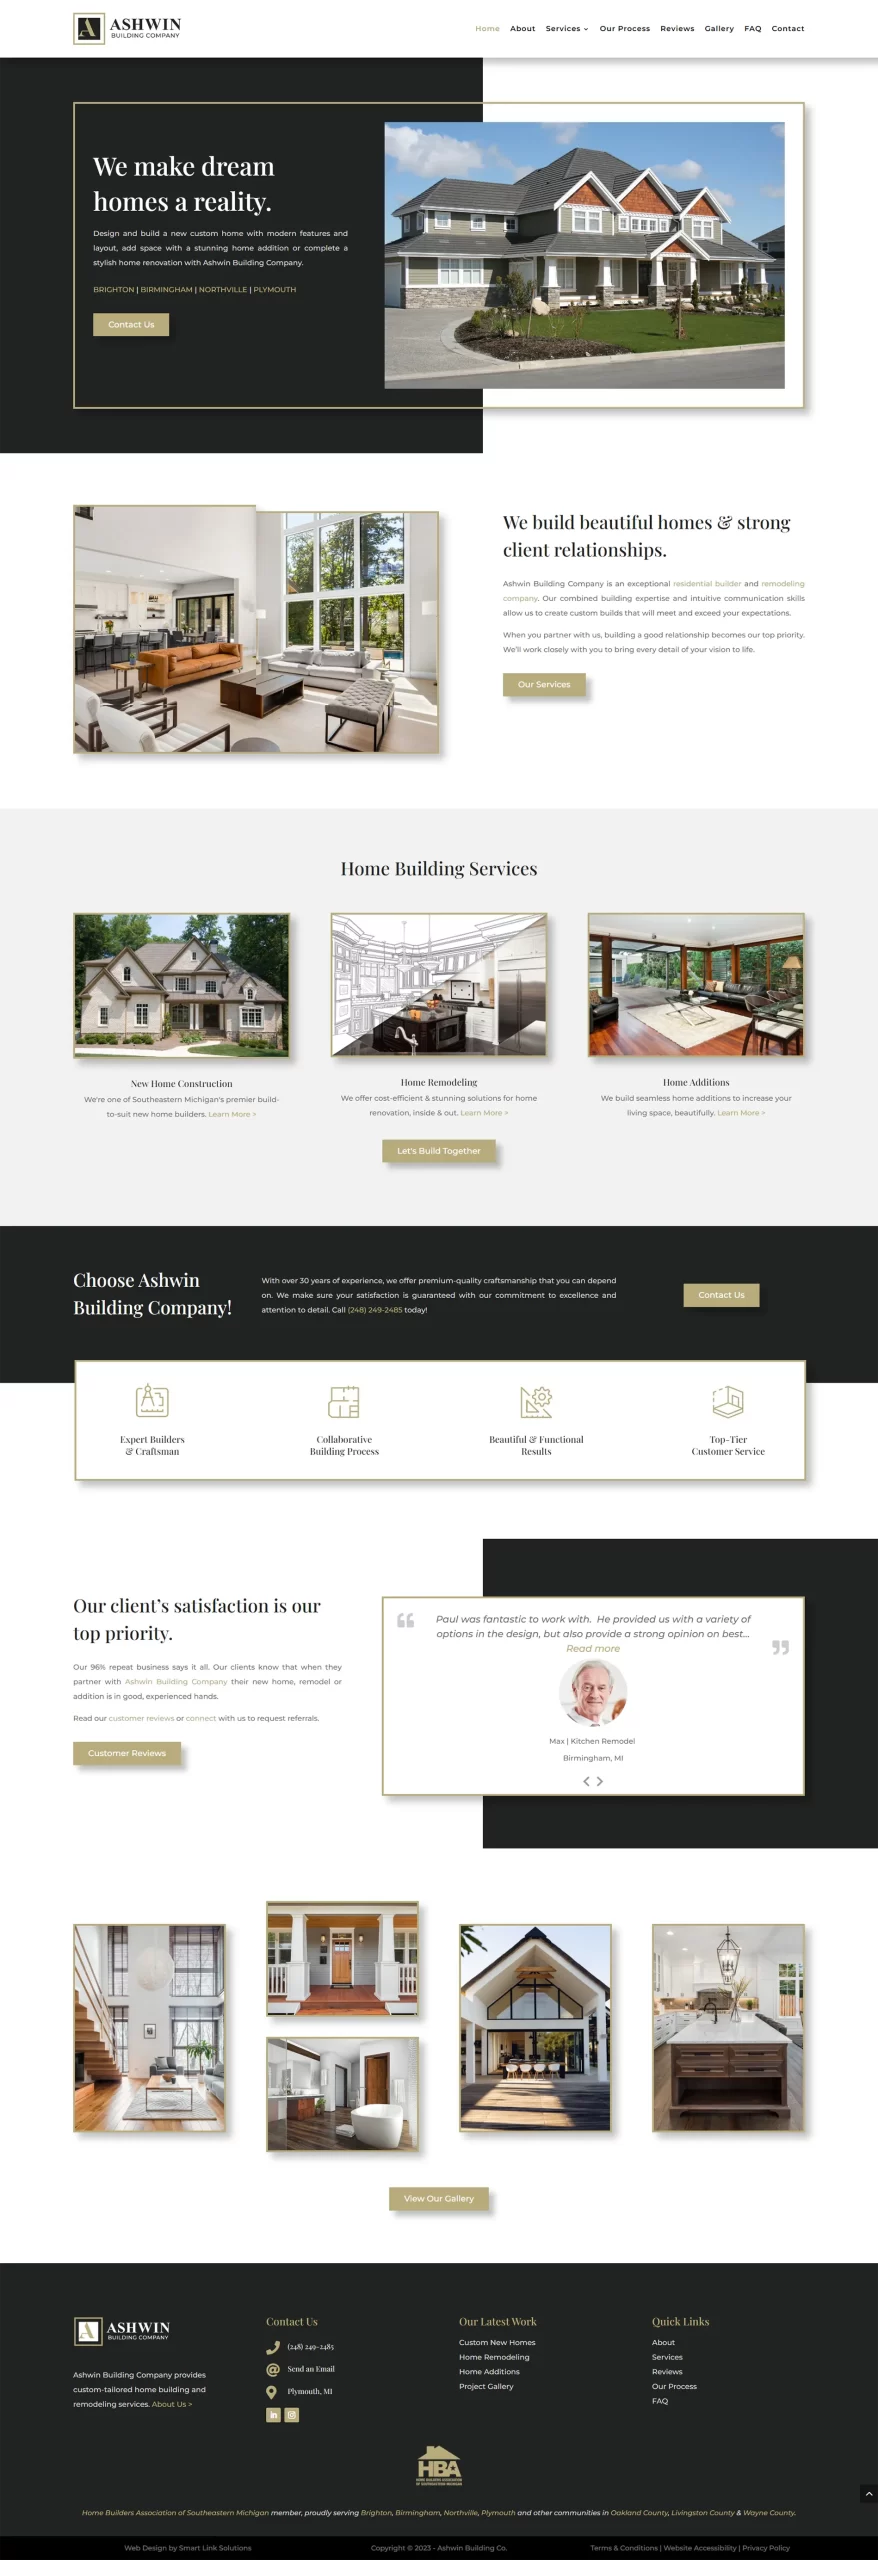 Ashwin Building Company Home Builder Website Design Examples